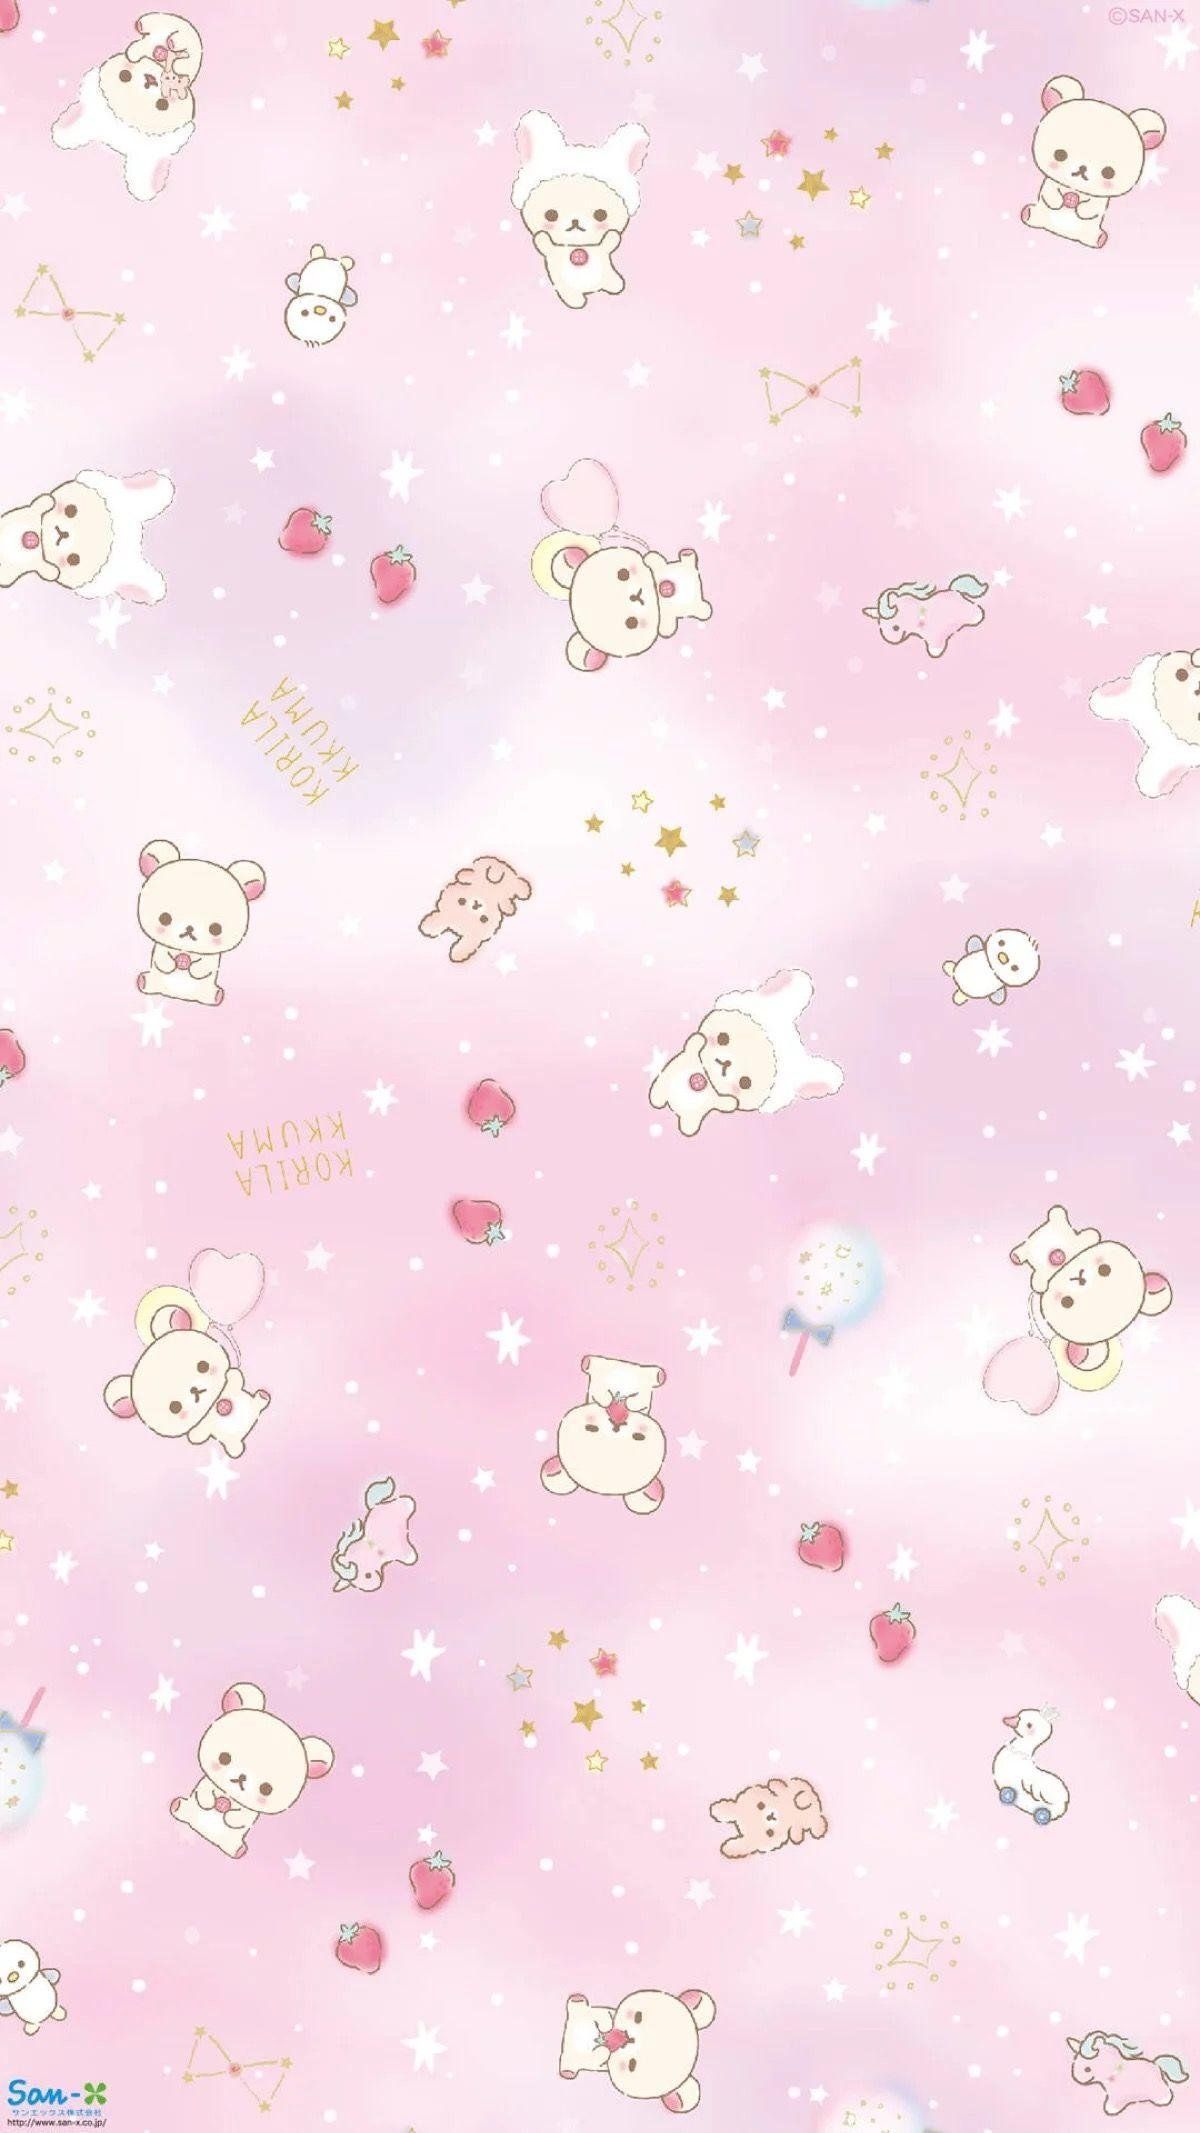 Cute pink aesthetic Wallpaper Download